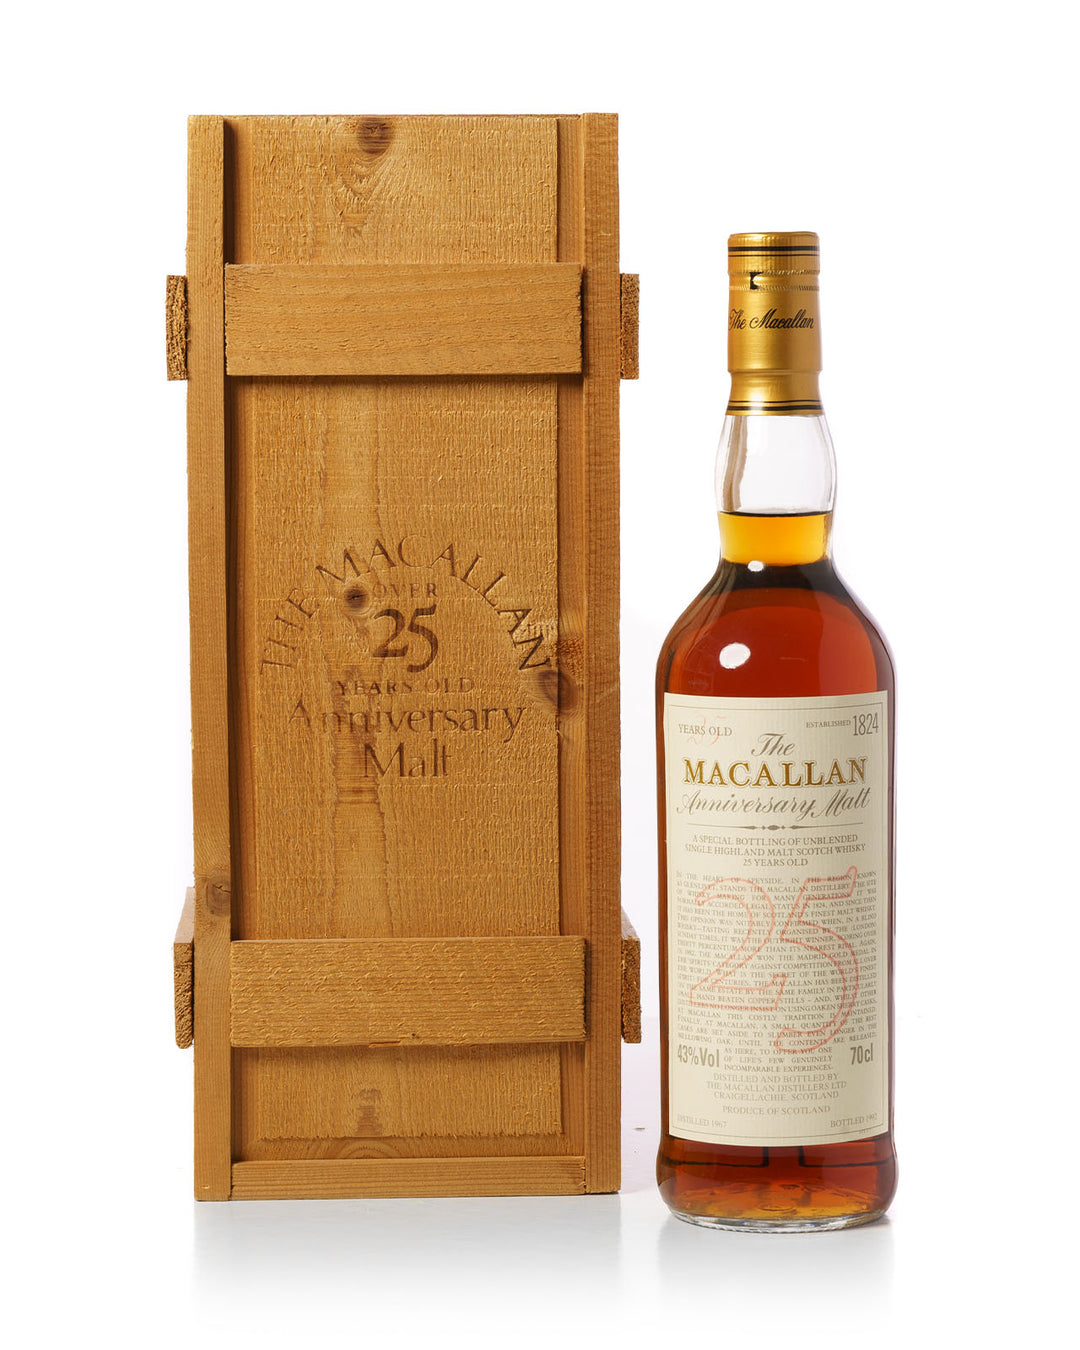 Macallan 1967 25 Year Old Anniversary Malt Bottled 1992 With Original Wood Box